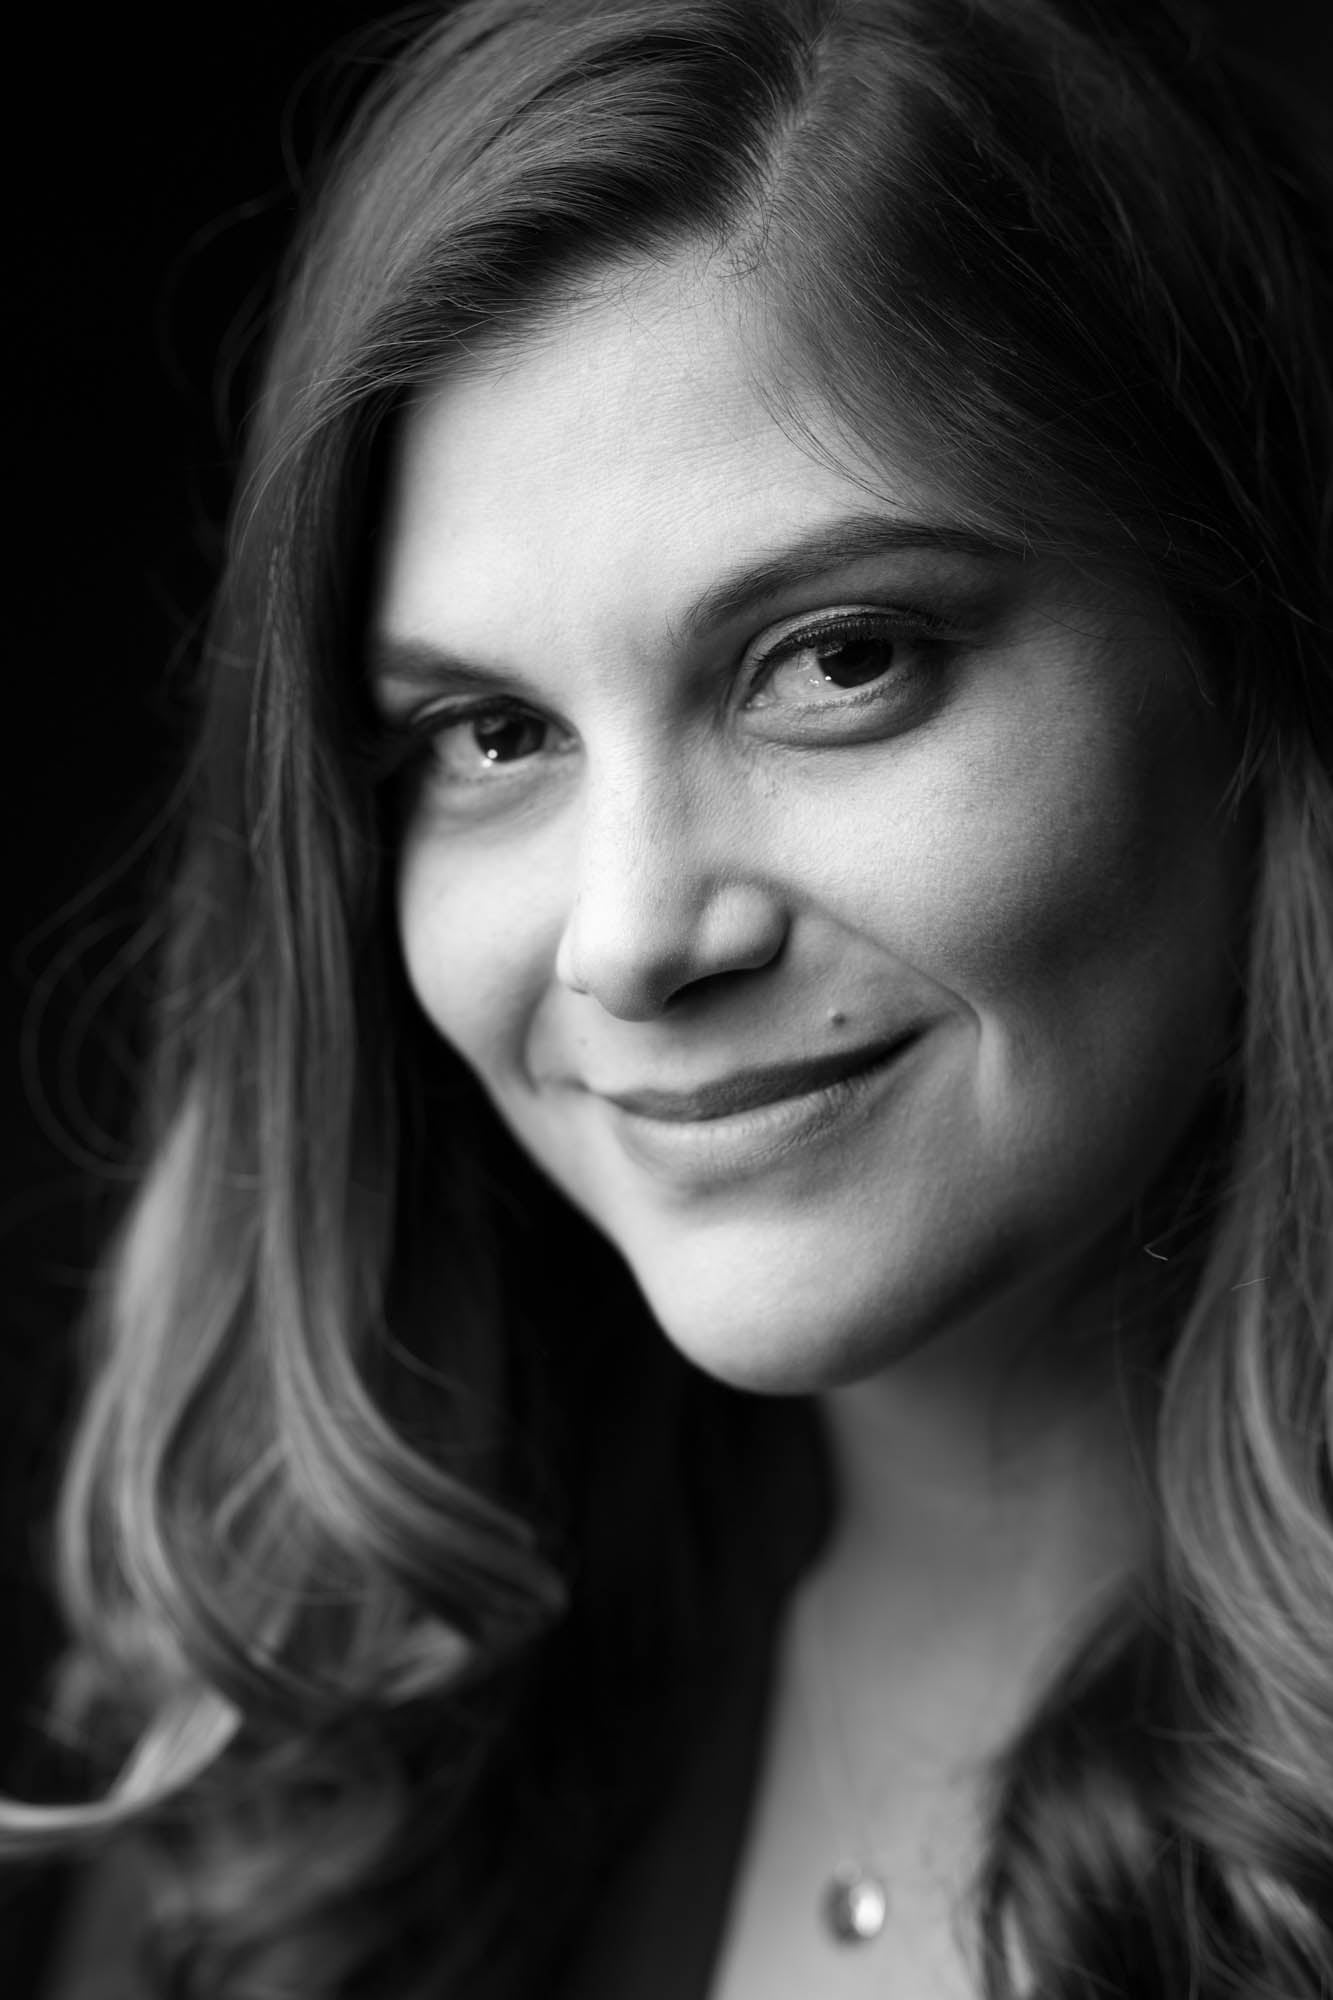 black and white headshot photo of a woman